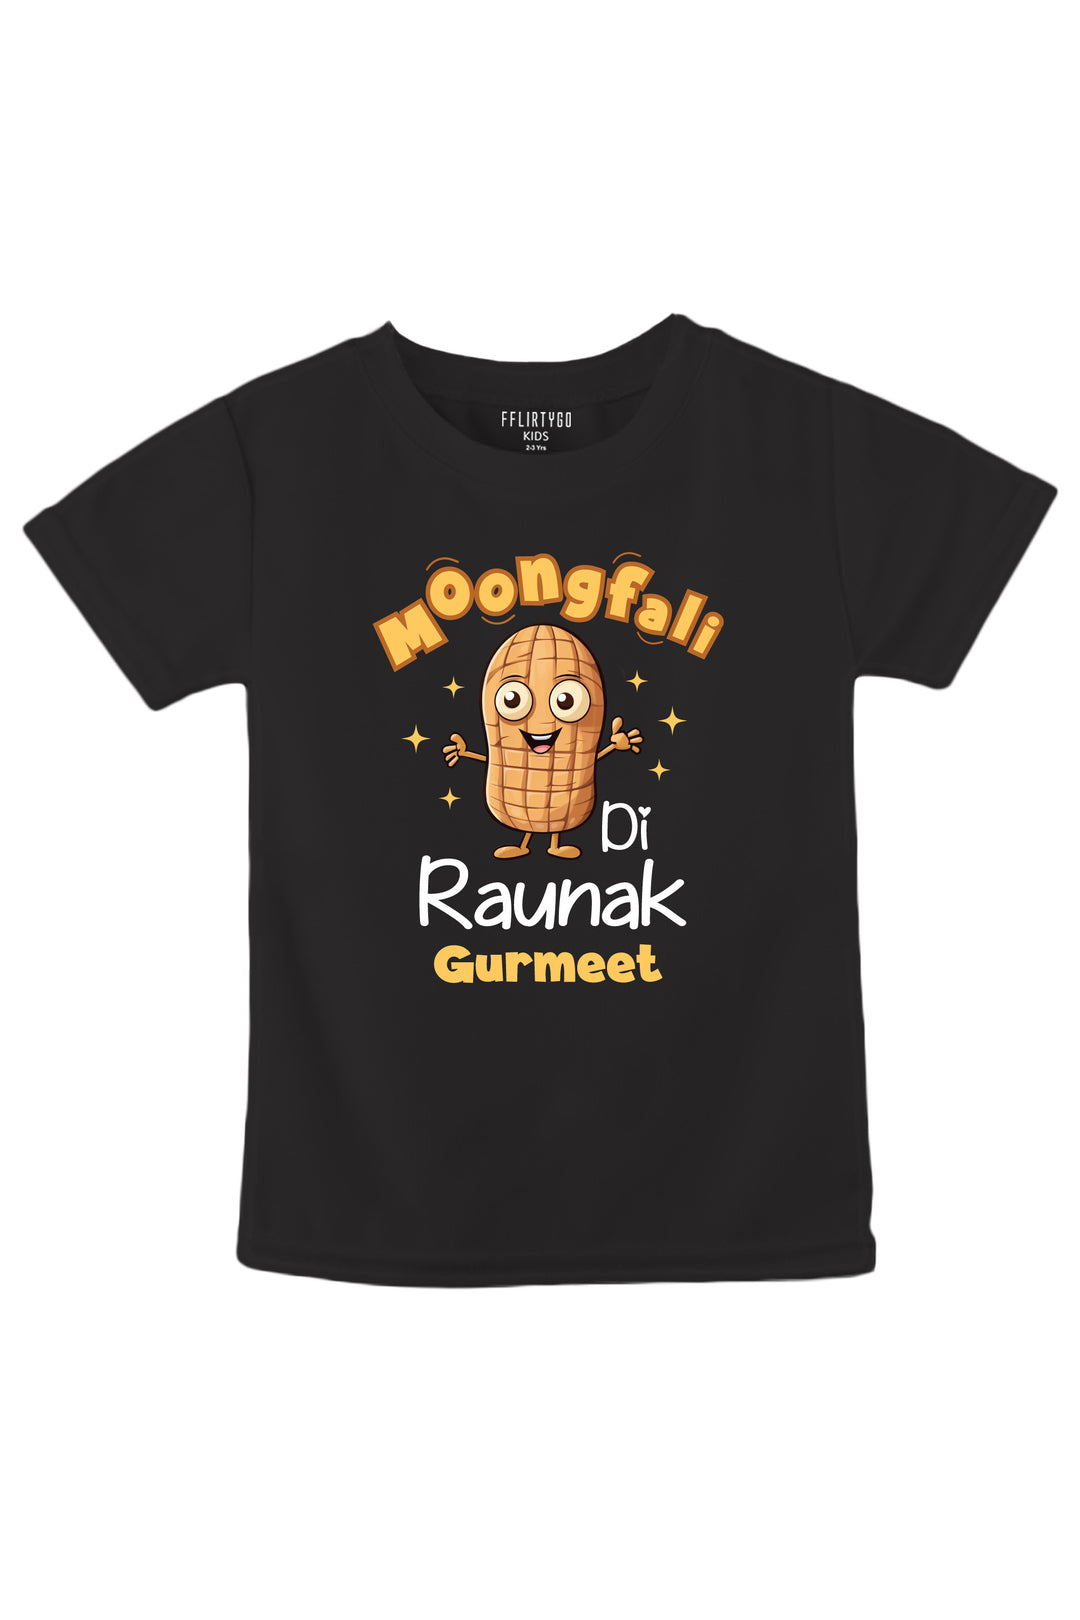 MoongFali Di Raunak Kids T Shirt w/ Custom Name